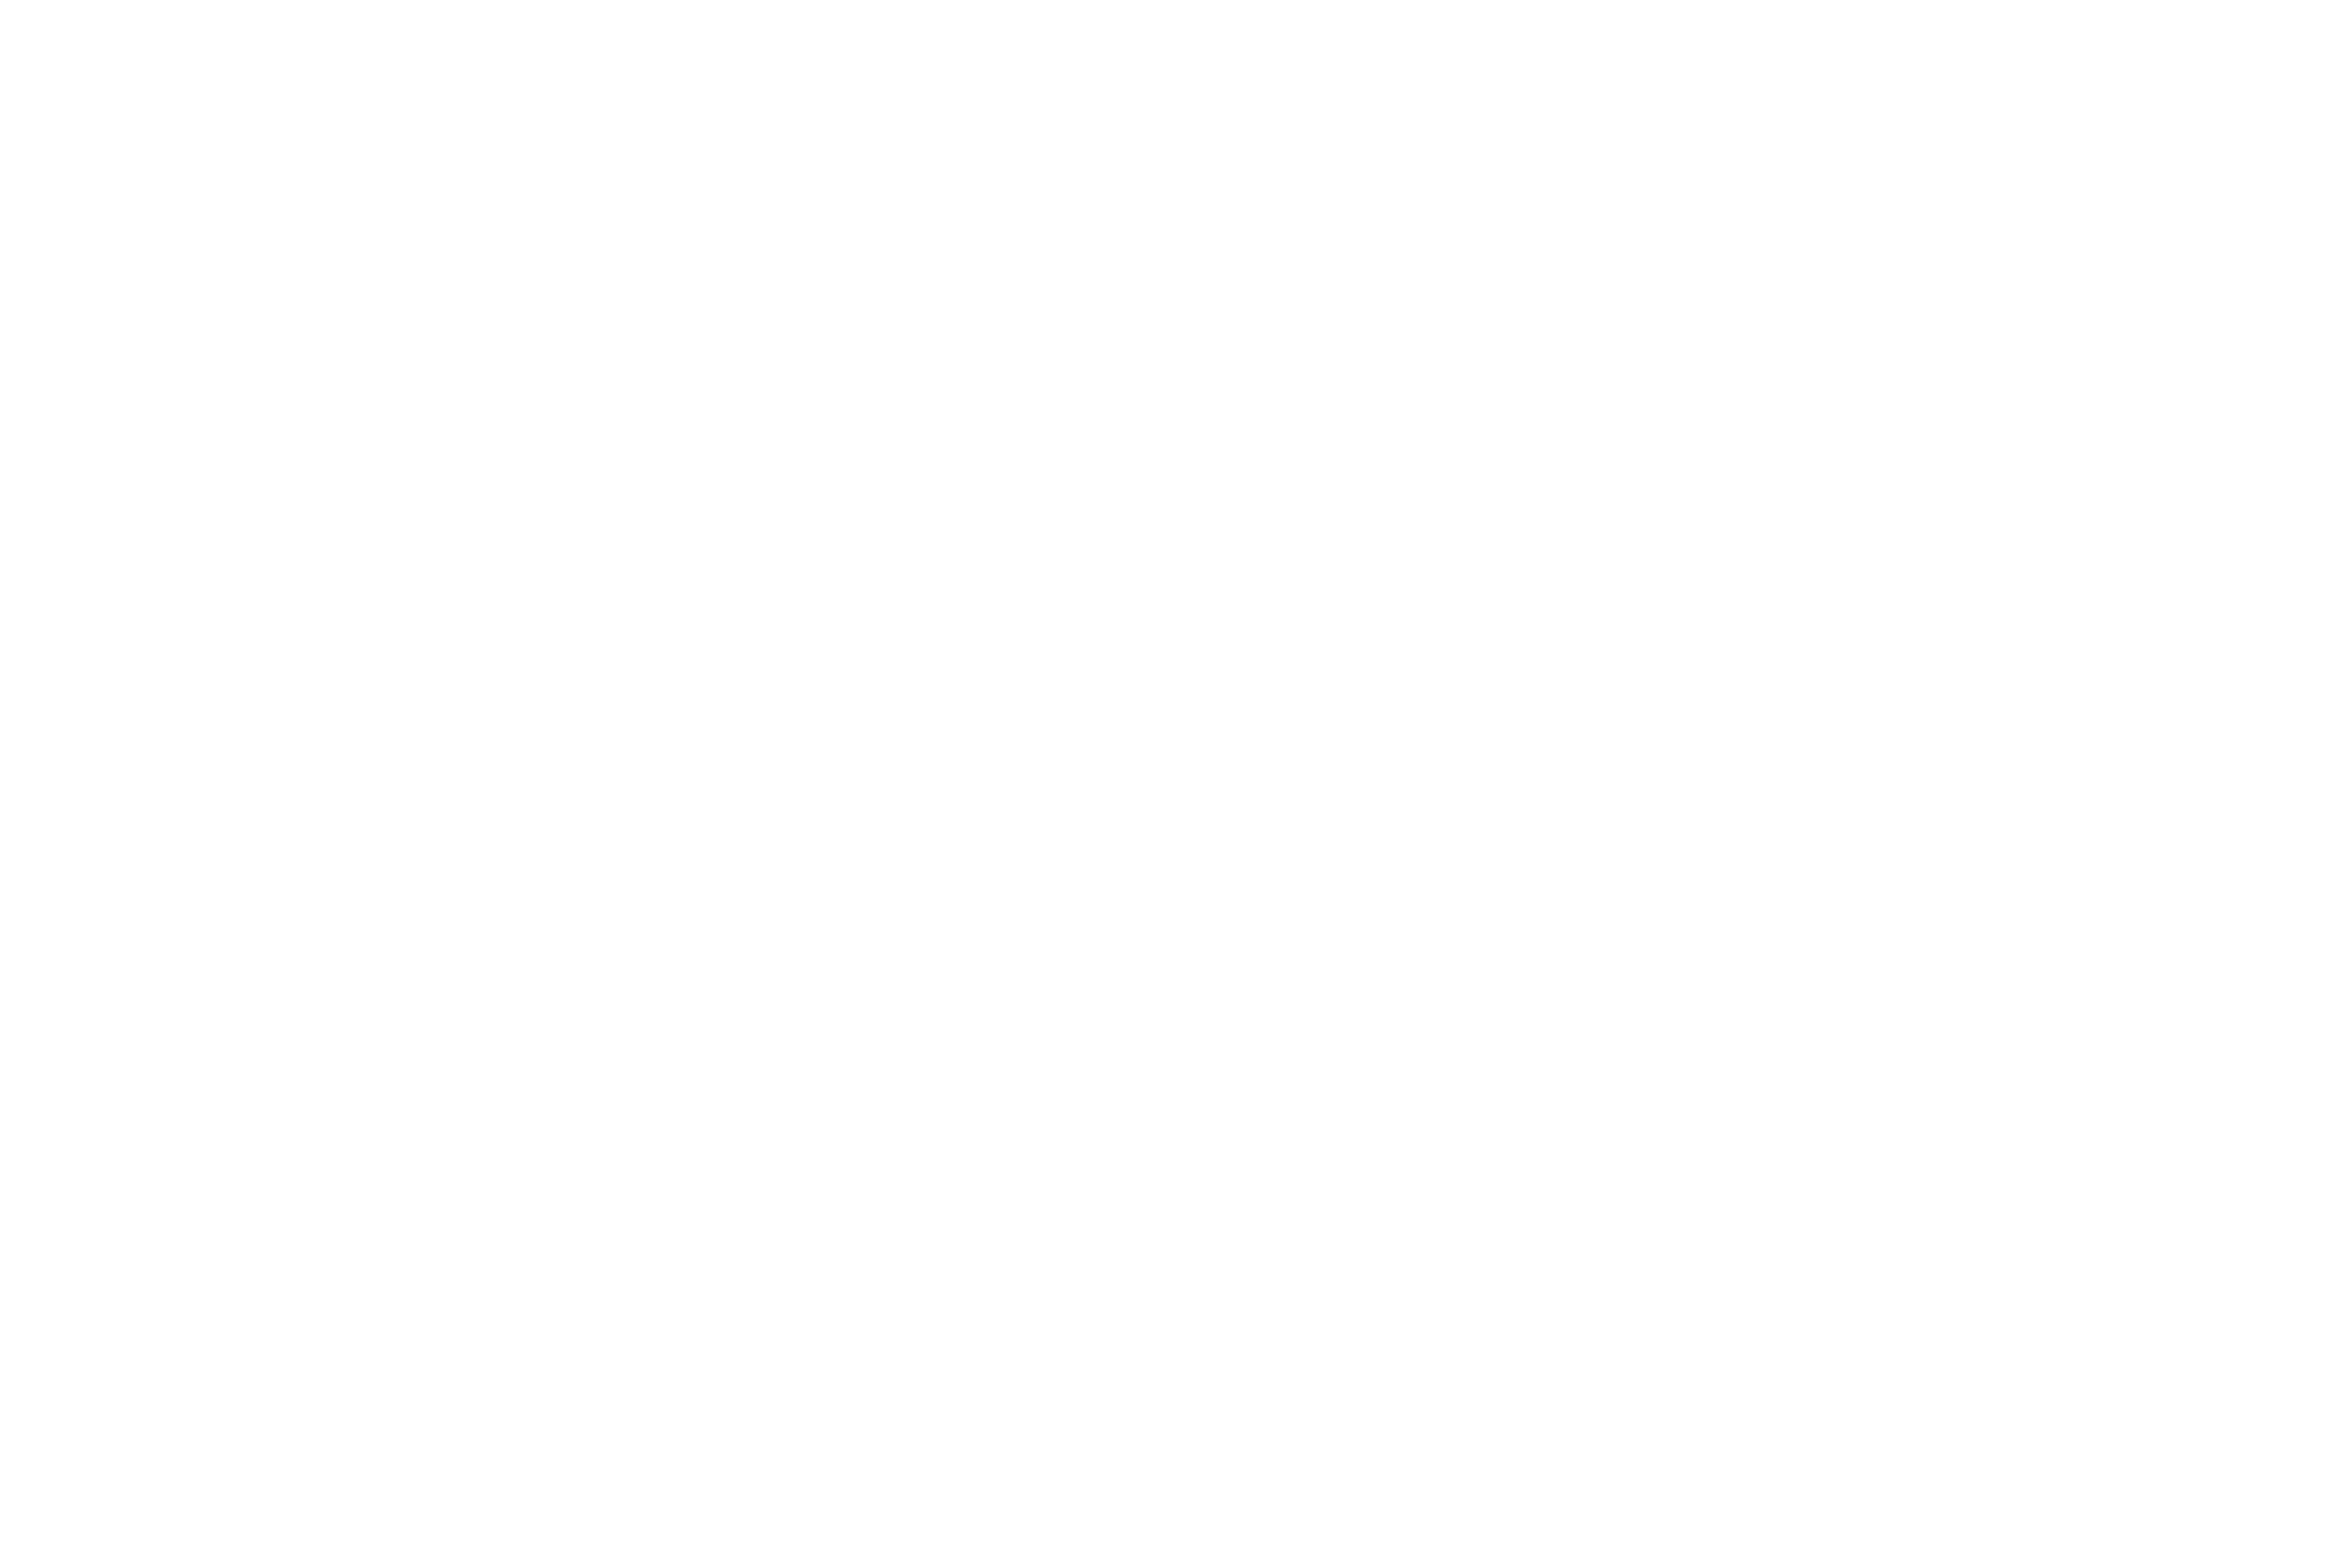 Danielle Levitt fashion photography black and white film noir celebrity portrait of UNCUT GEMS actress Julia Fox dressed as femme fatale driving vintage sports car for King Kong Magazine editorial